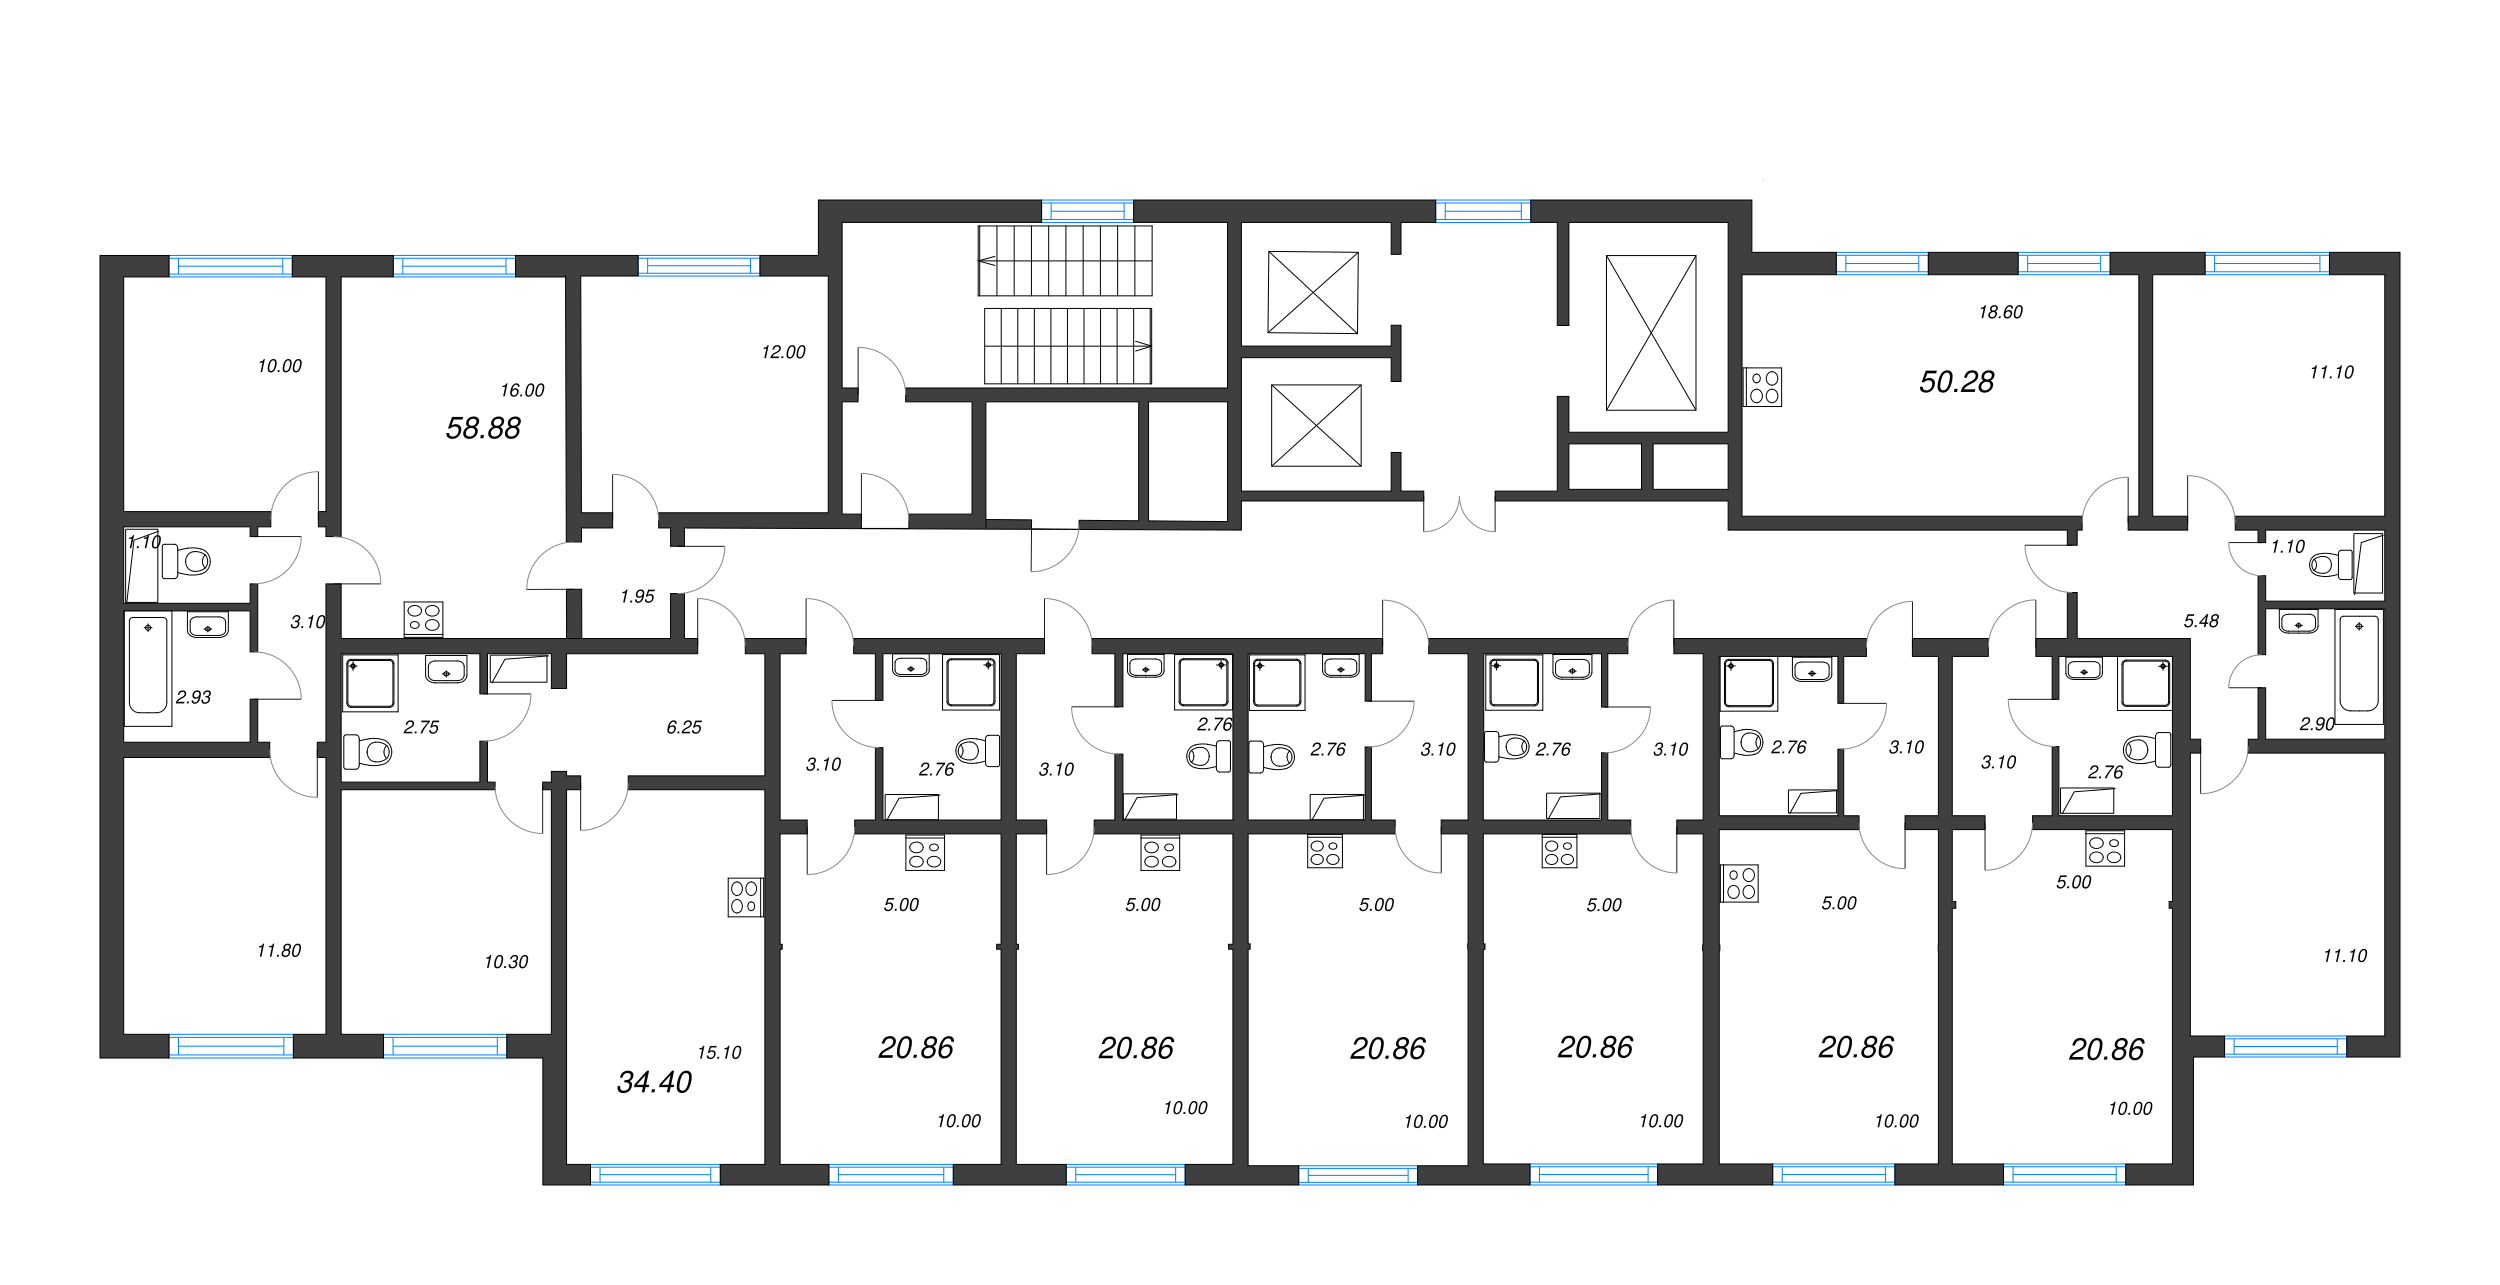 4-комнатная (Евро) квартира, 58.88 м² - планировка этажа